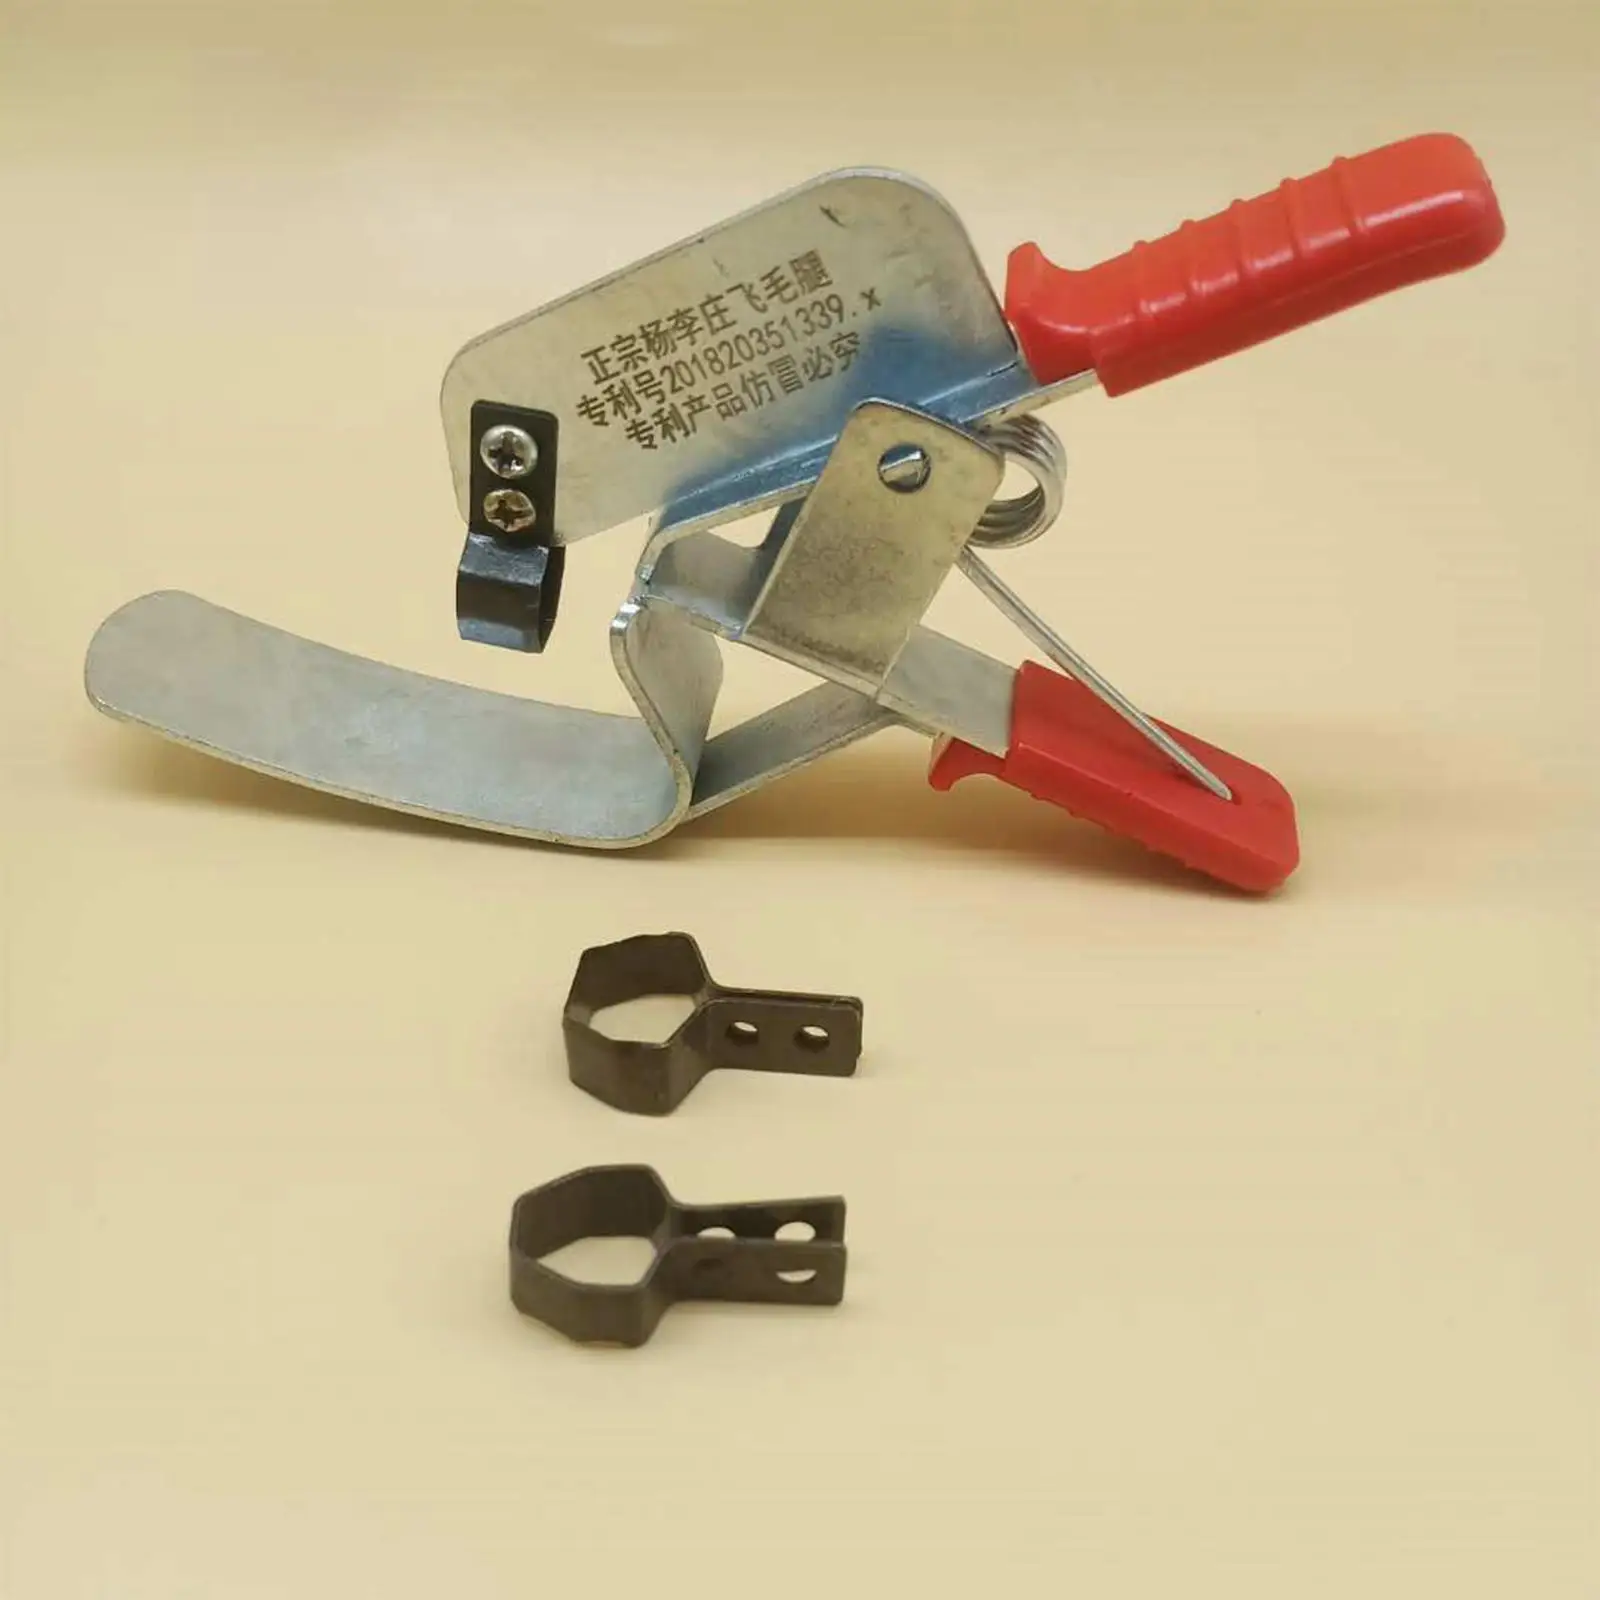 Ring Barking Cutter 2.5-9cm Non-Skid Multifunction Pruning Tool Hand Sharp Scissor Bark Stripper Peeler Pliers for Shear Branch